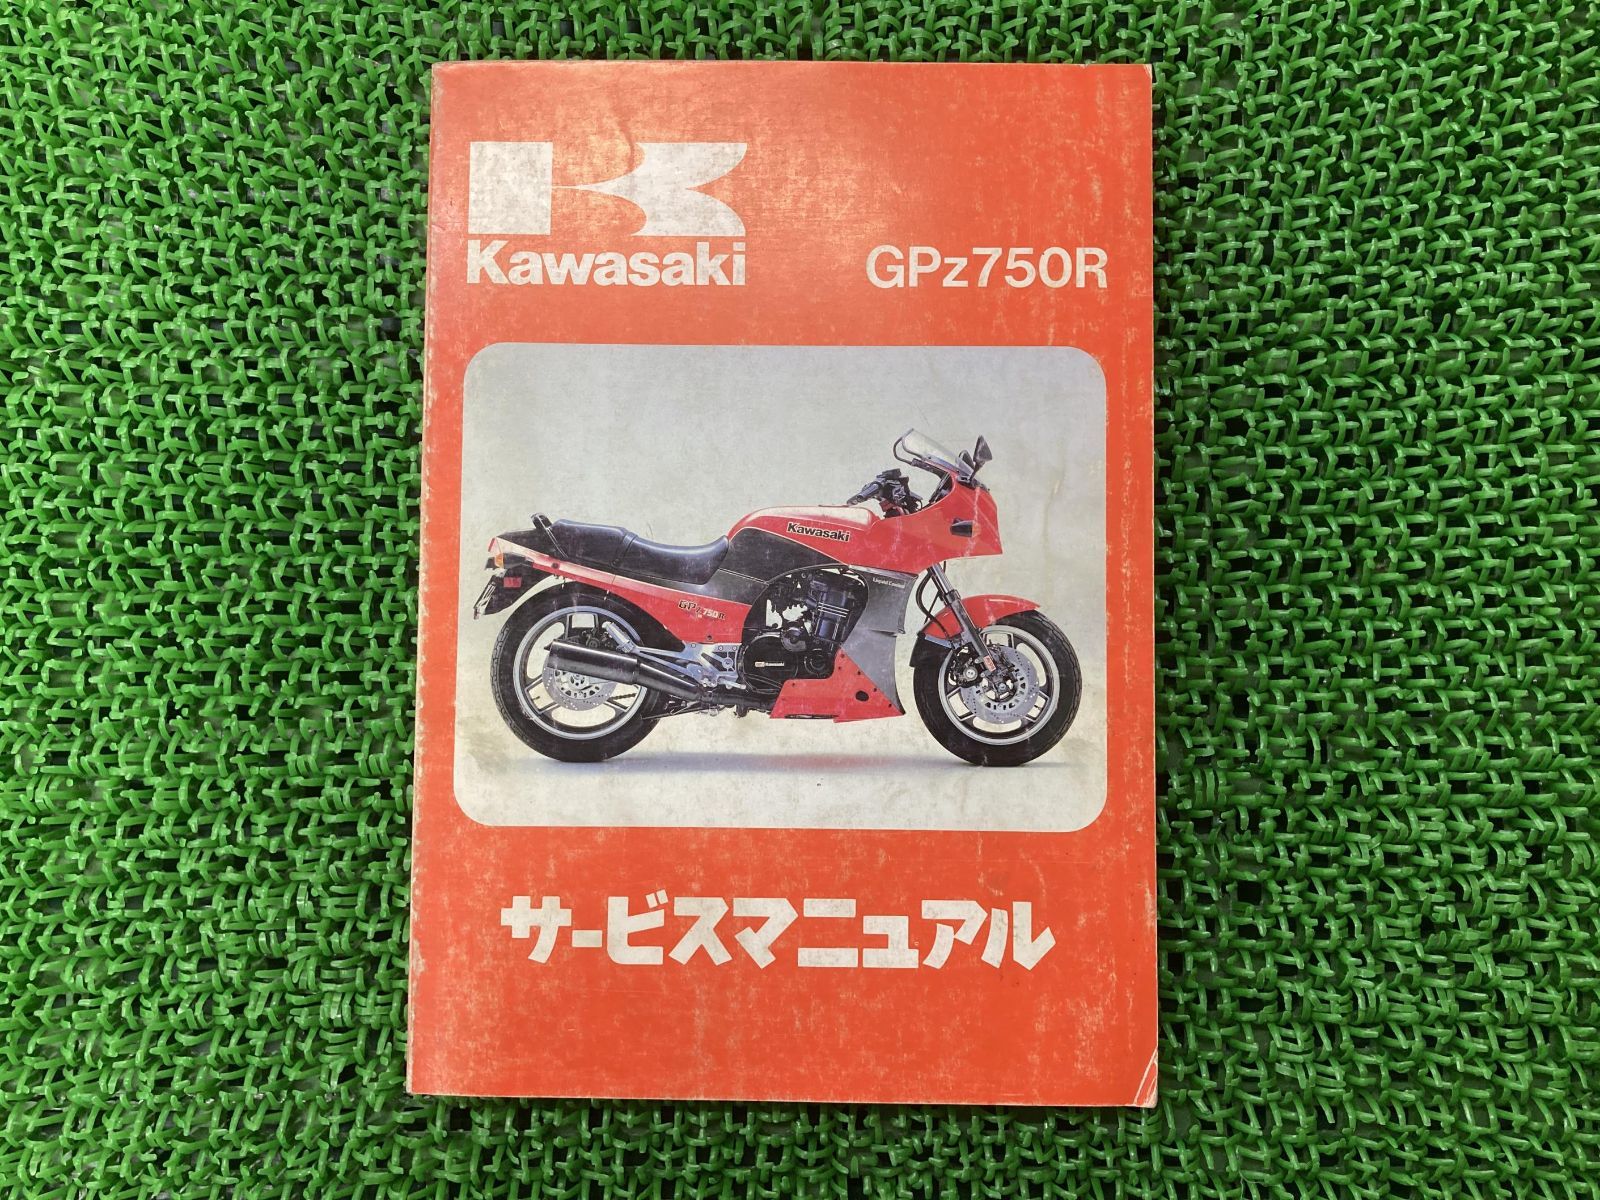 GPz750R サービスマニュアル 3版 配線図 カワサキ 正規 中古 バイク